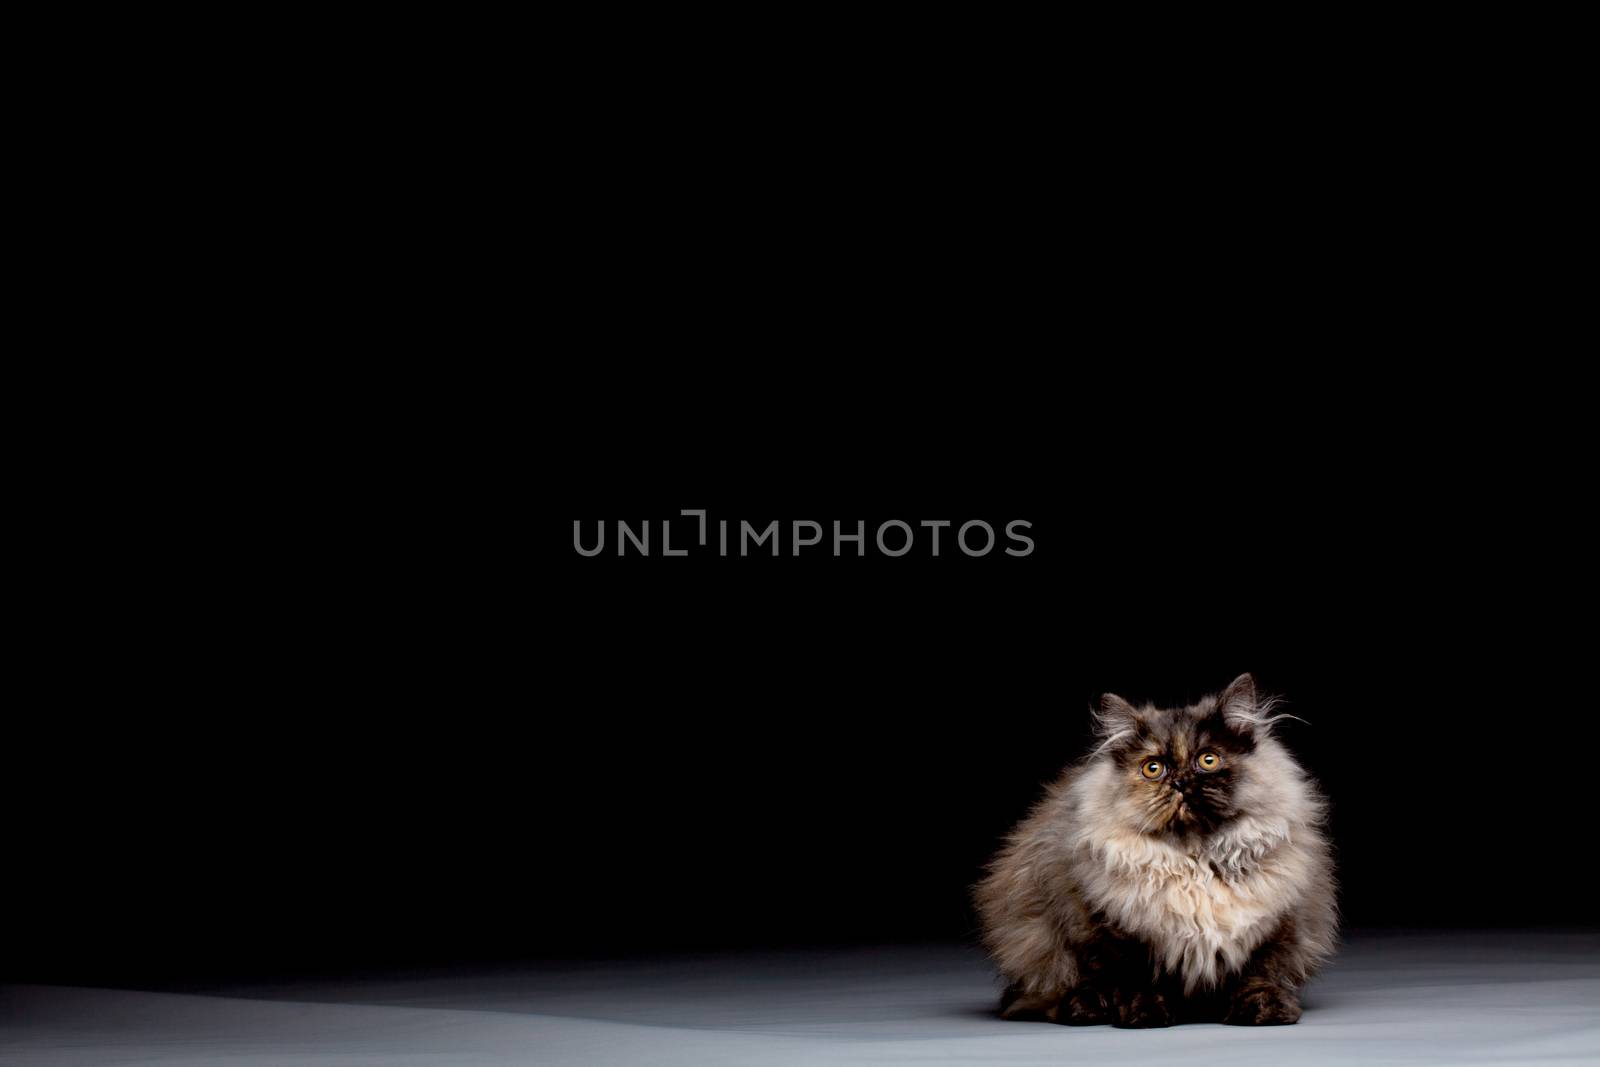 Chinchilla Persian little kitty against dark background